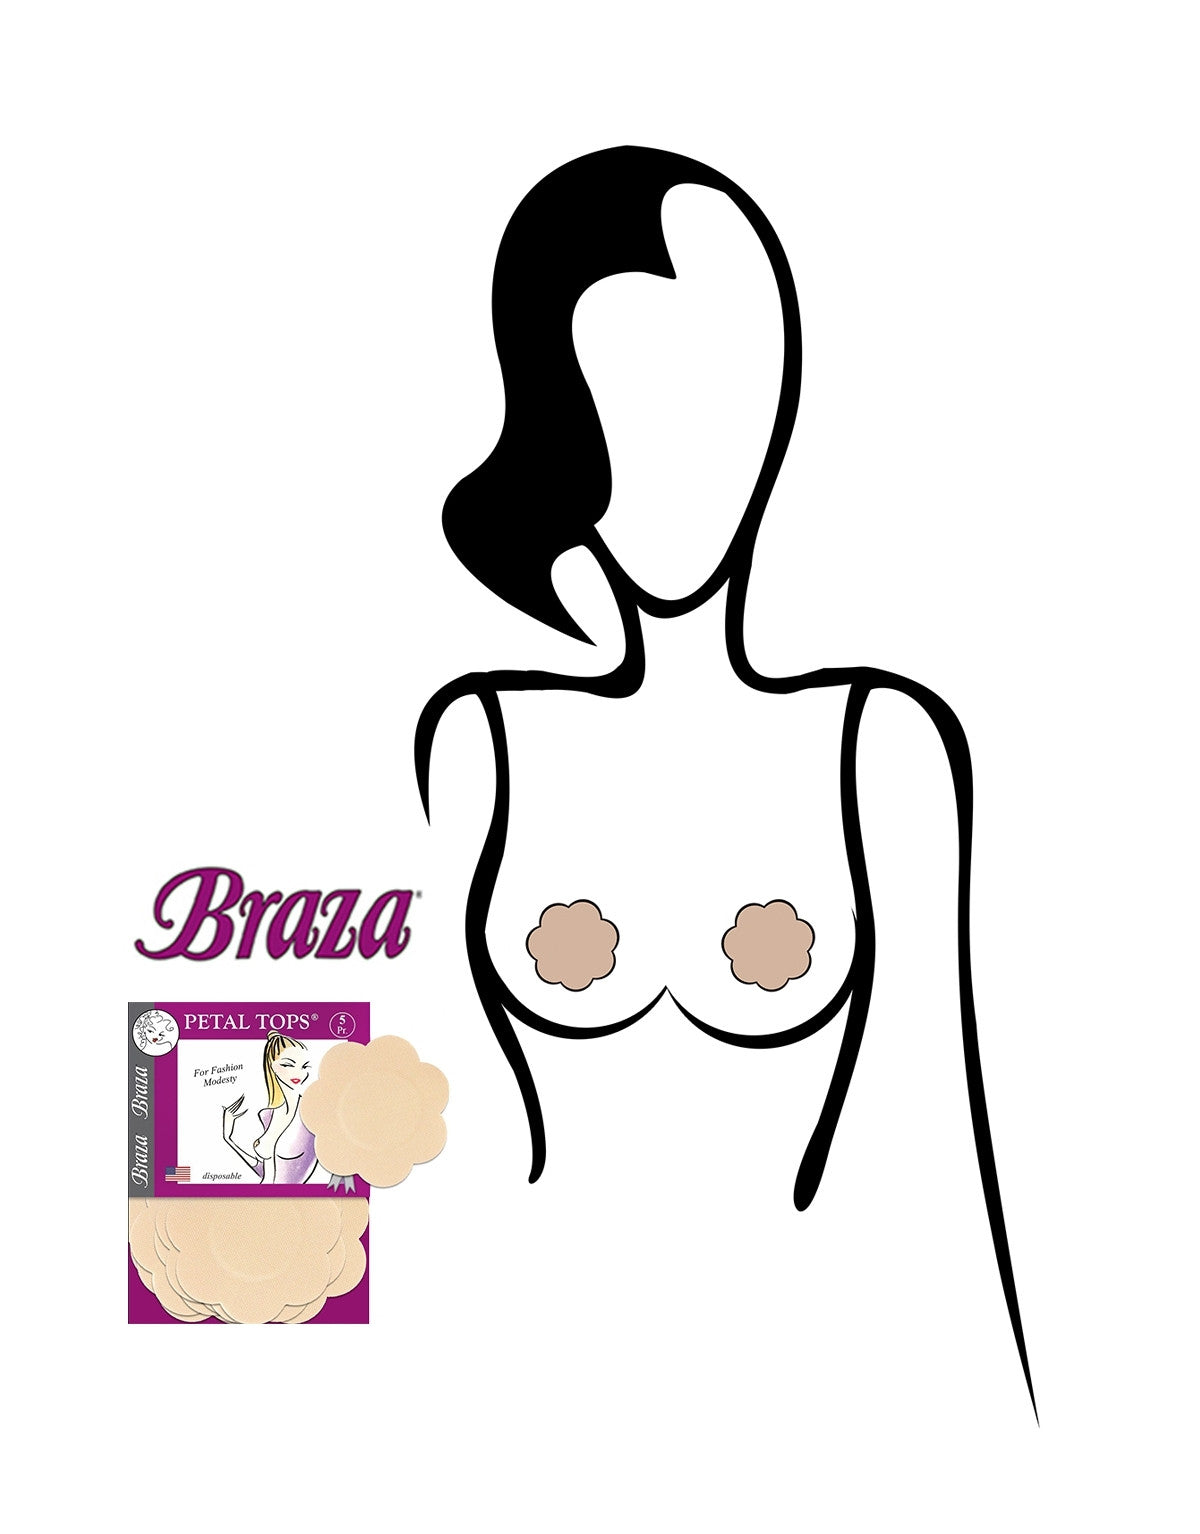 Braza Petal Tops - Nude colour flower shape nipple cover pasties.